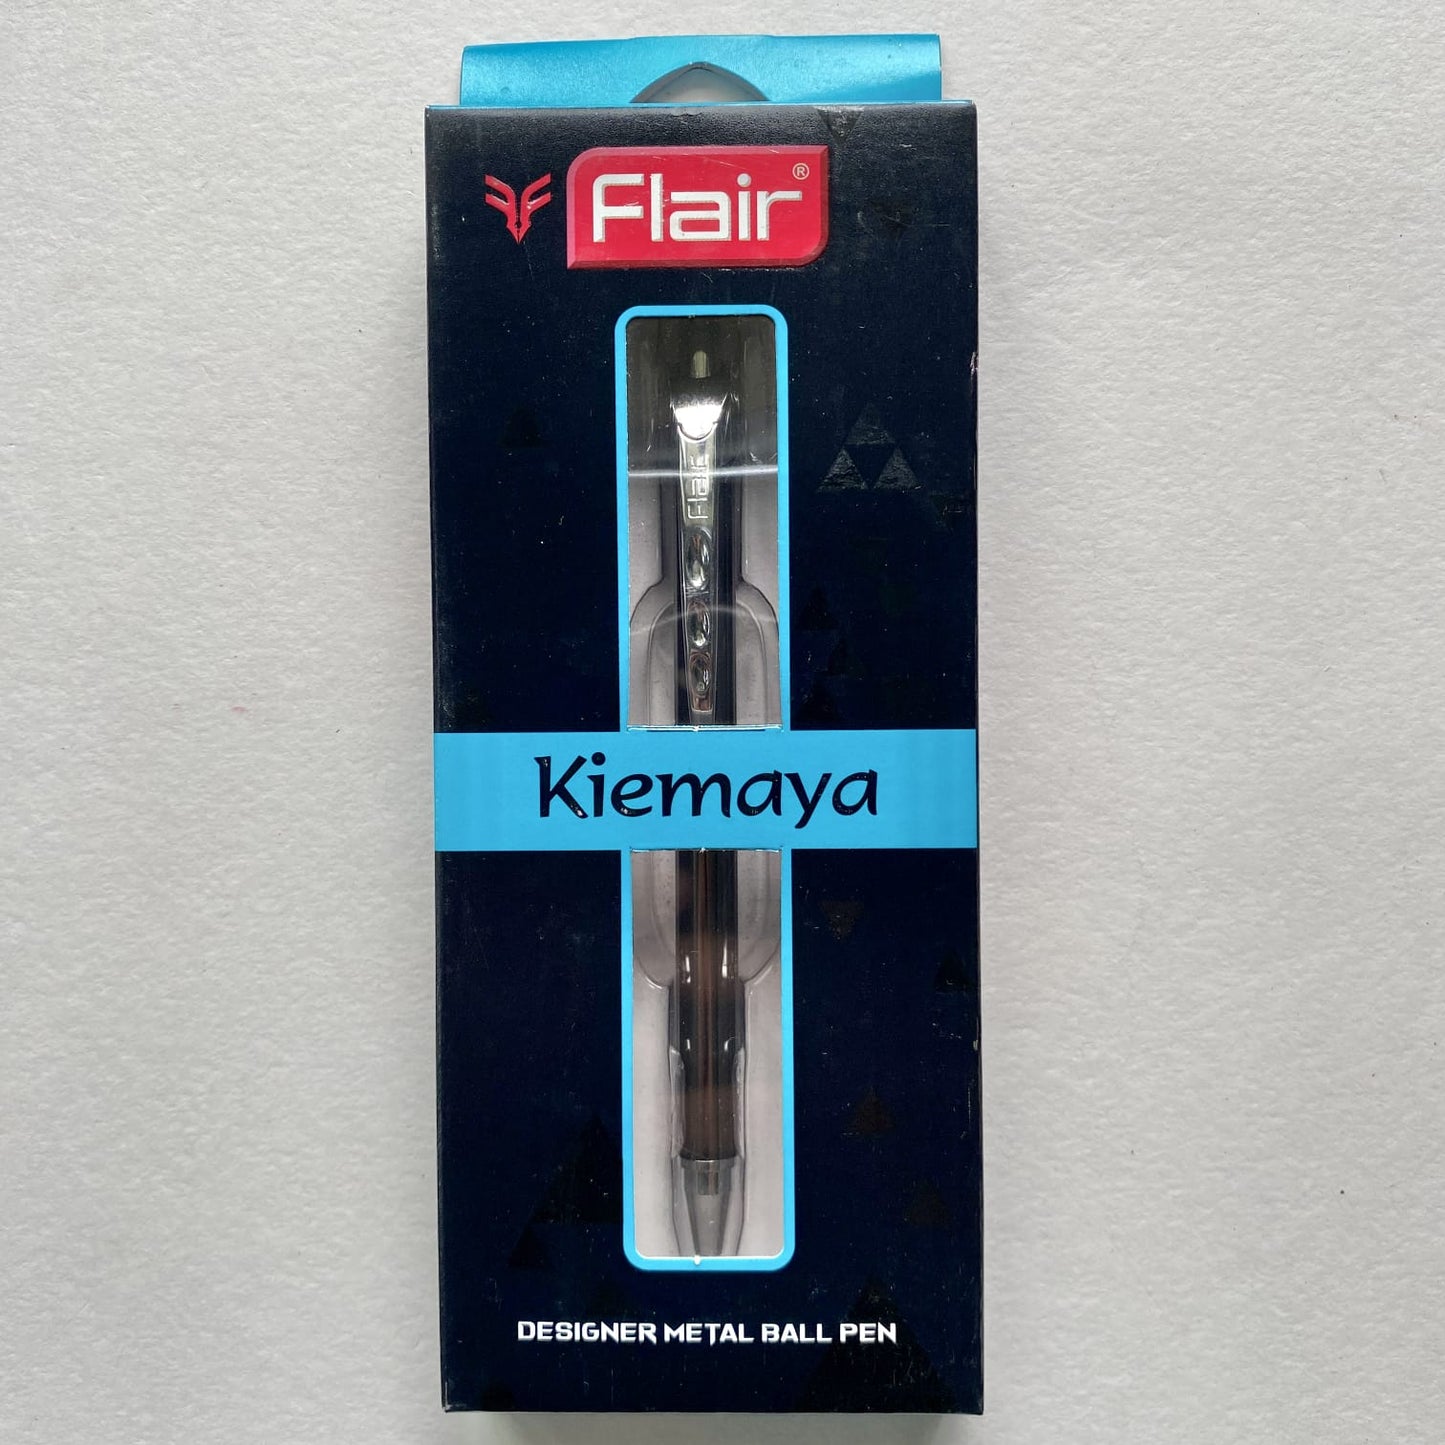 Flair Kiemaya Ball Pen | Metallic Body | Body Color: Metallic Black | Ink Color: Blue